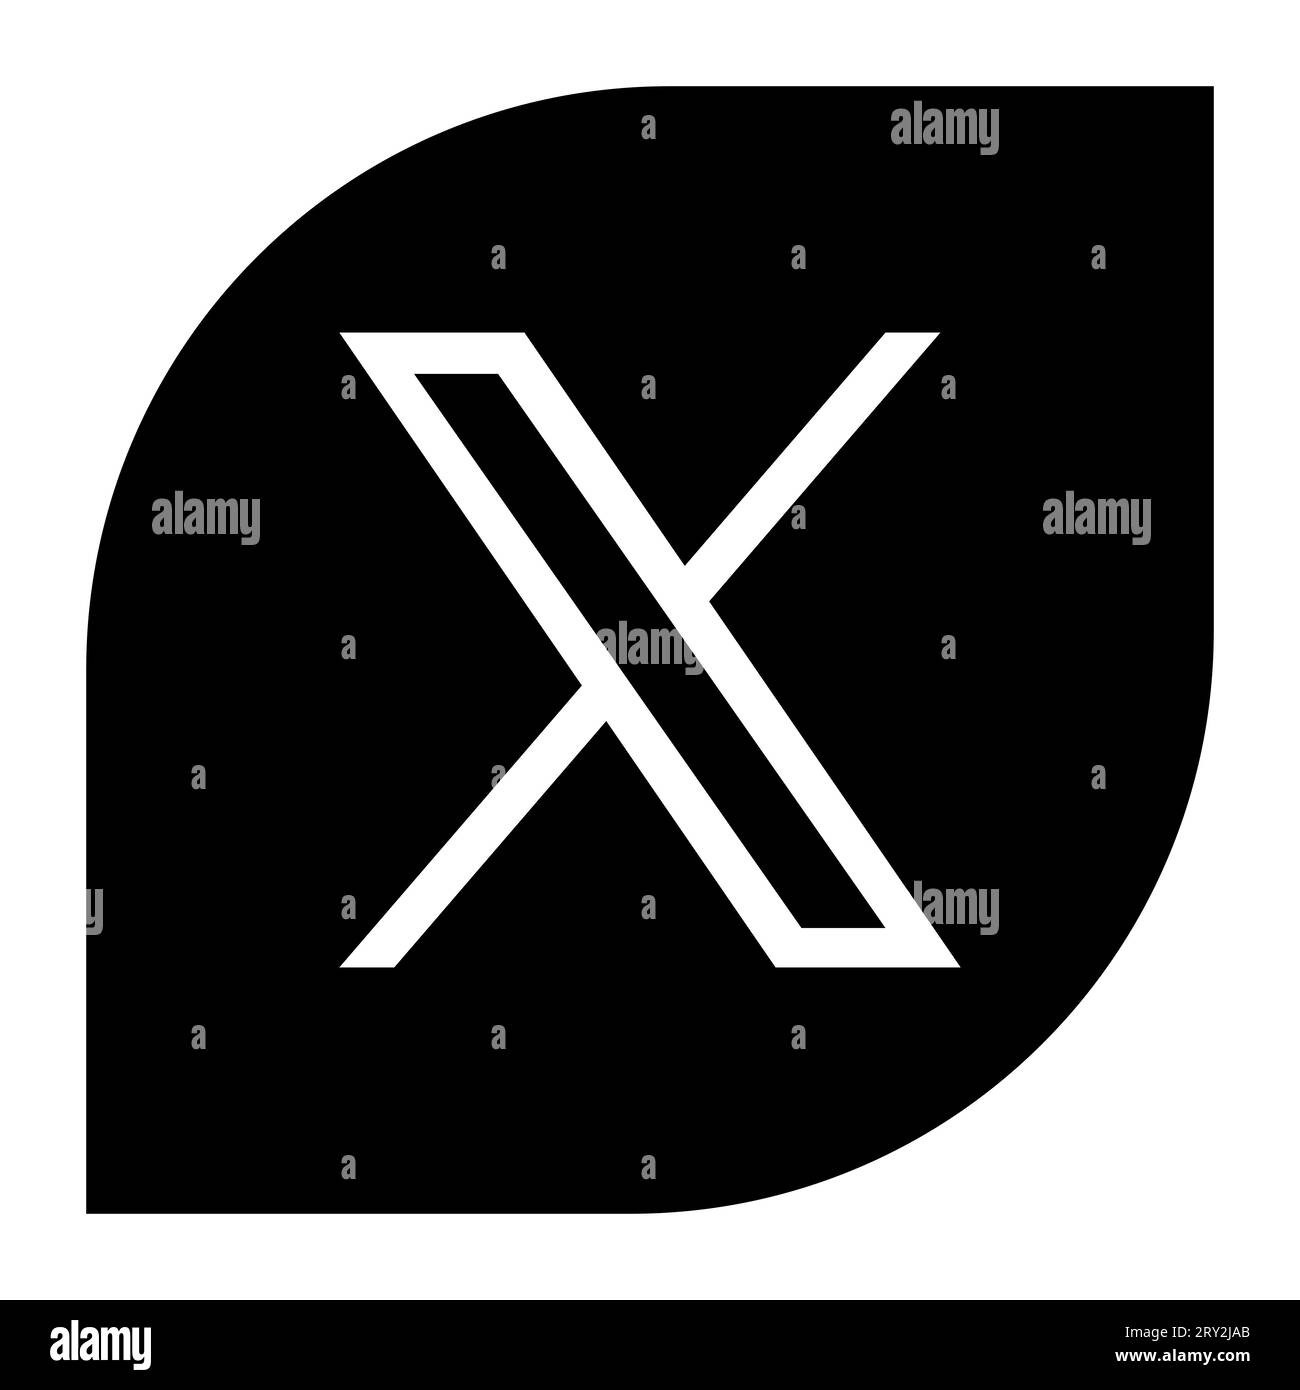 X, former Twitter, social media app icon. Black silhouete round diagonal corner square shape vector illustration. Stock Vector